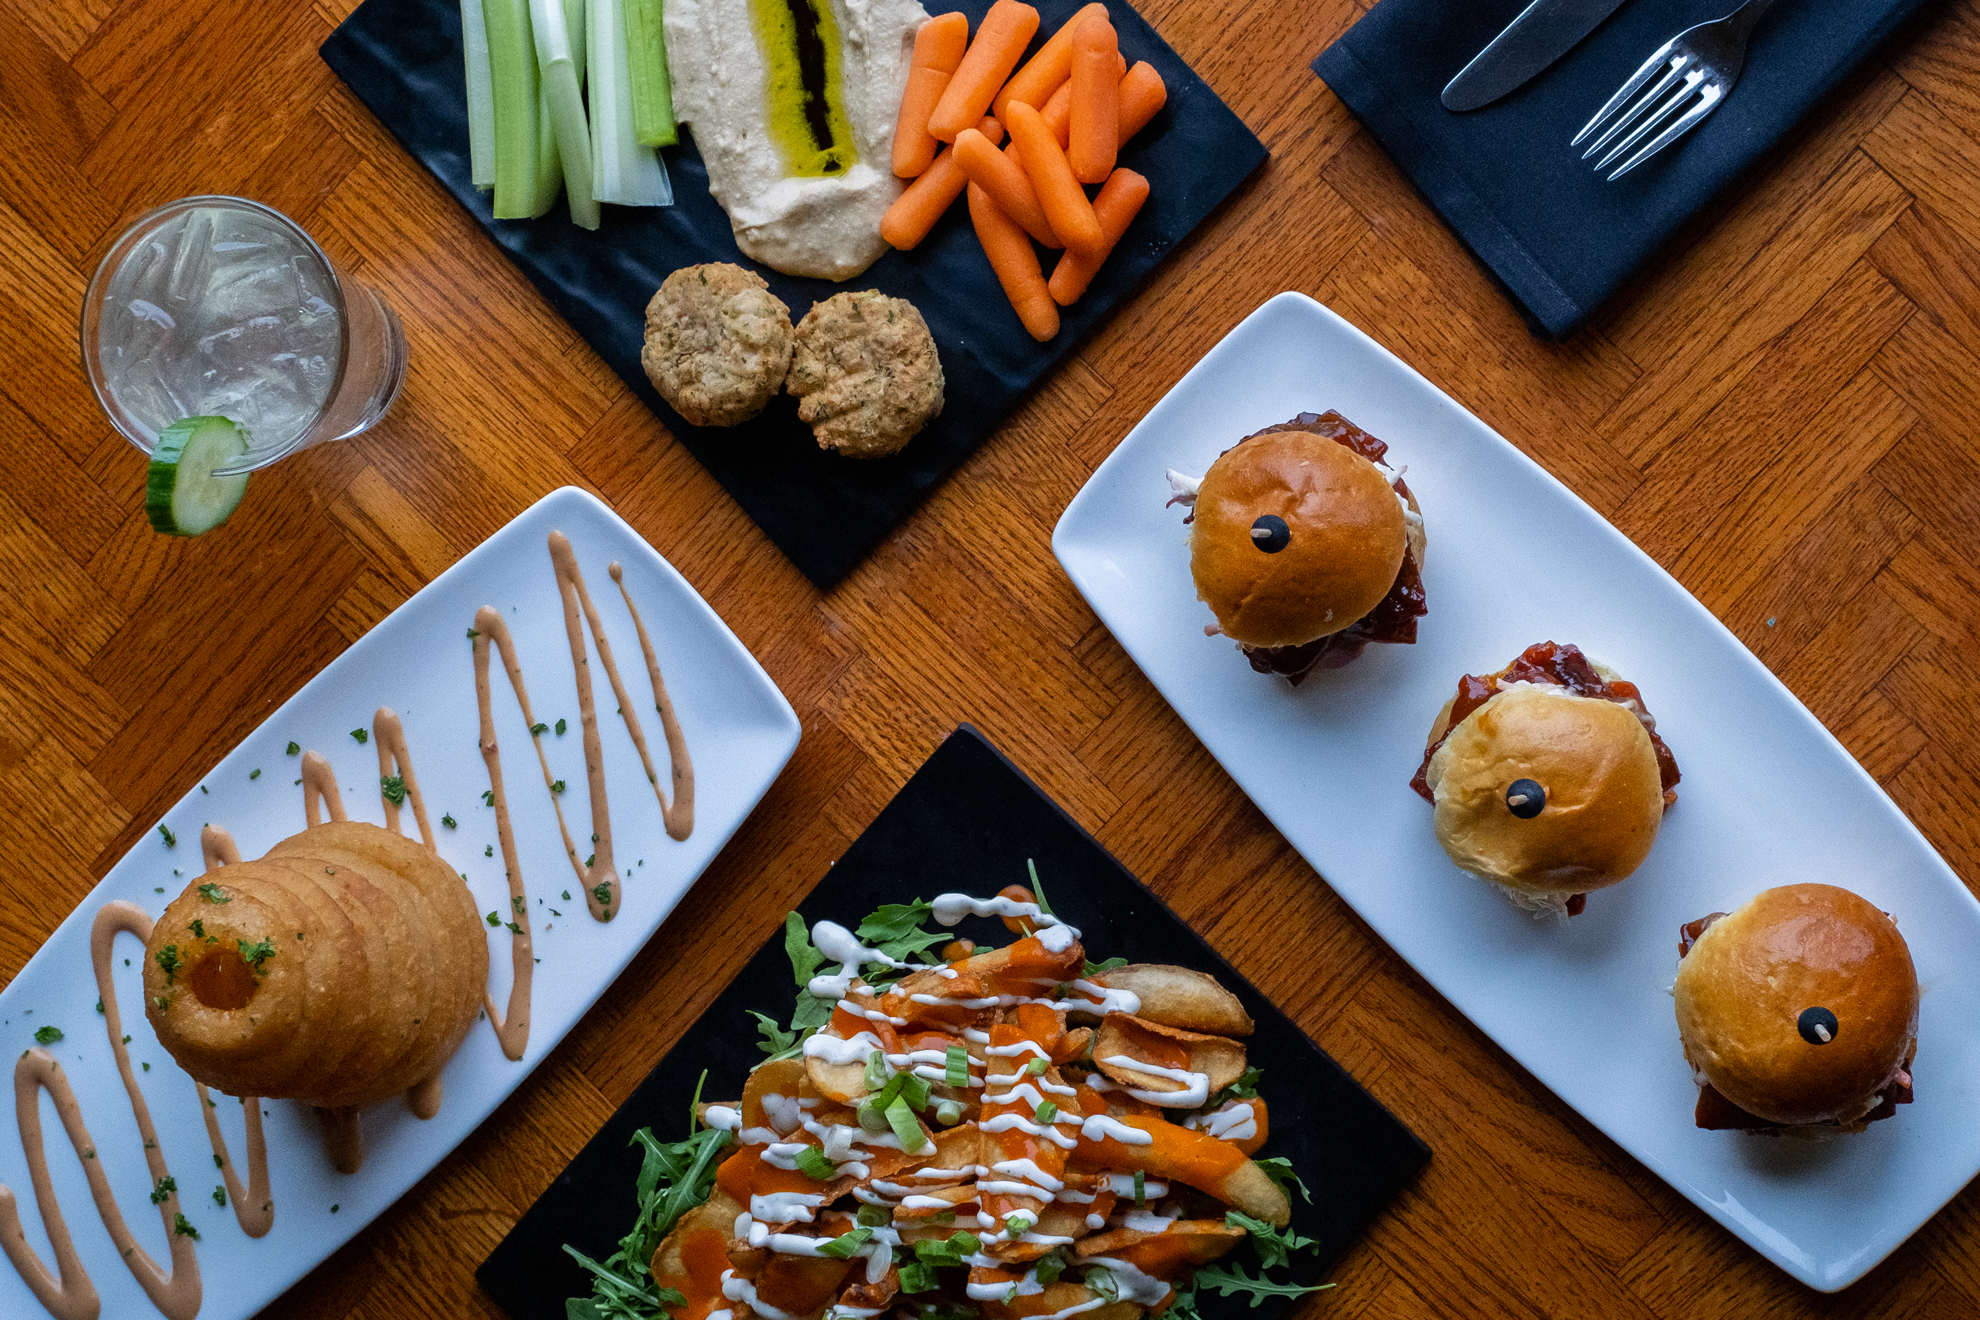 Overhead view of appetizers: slider burgers, onion rings, cookies, vegetables.